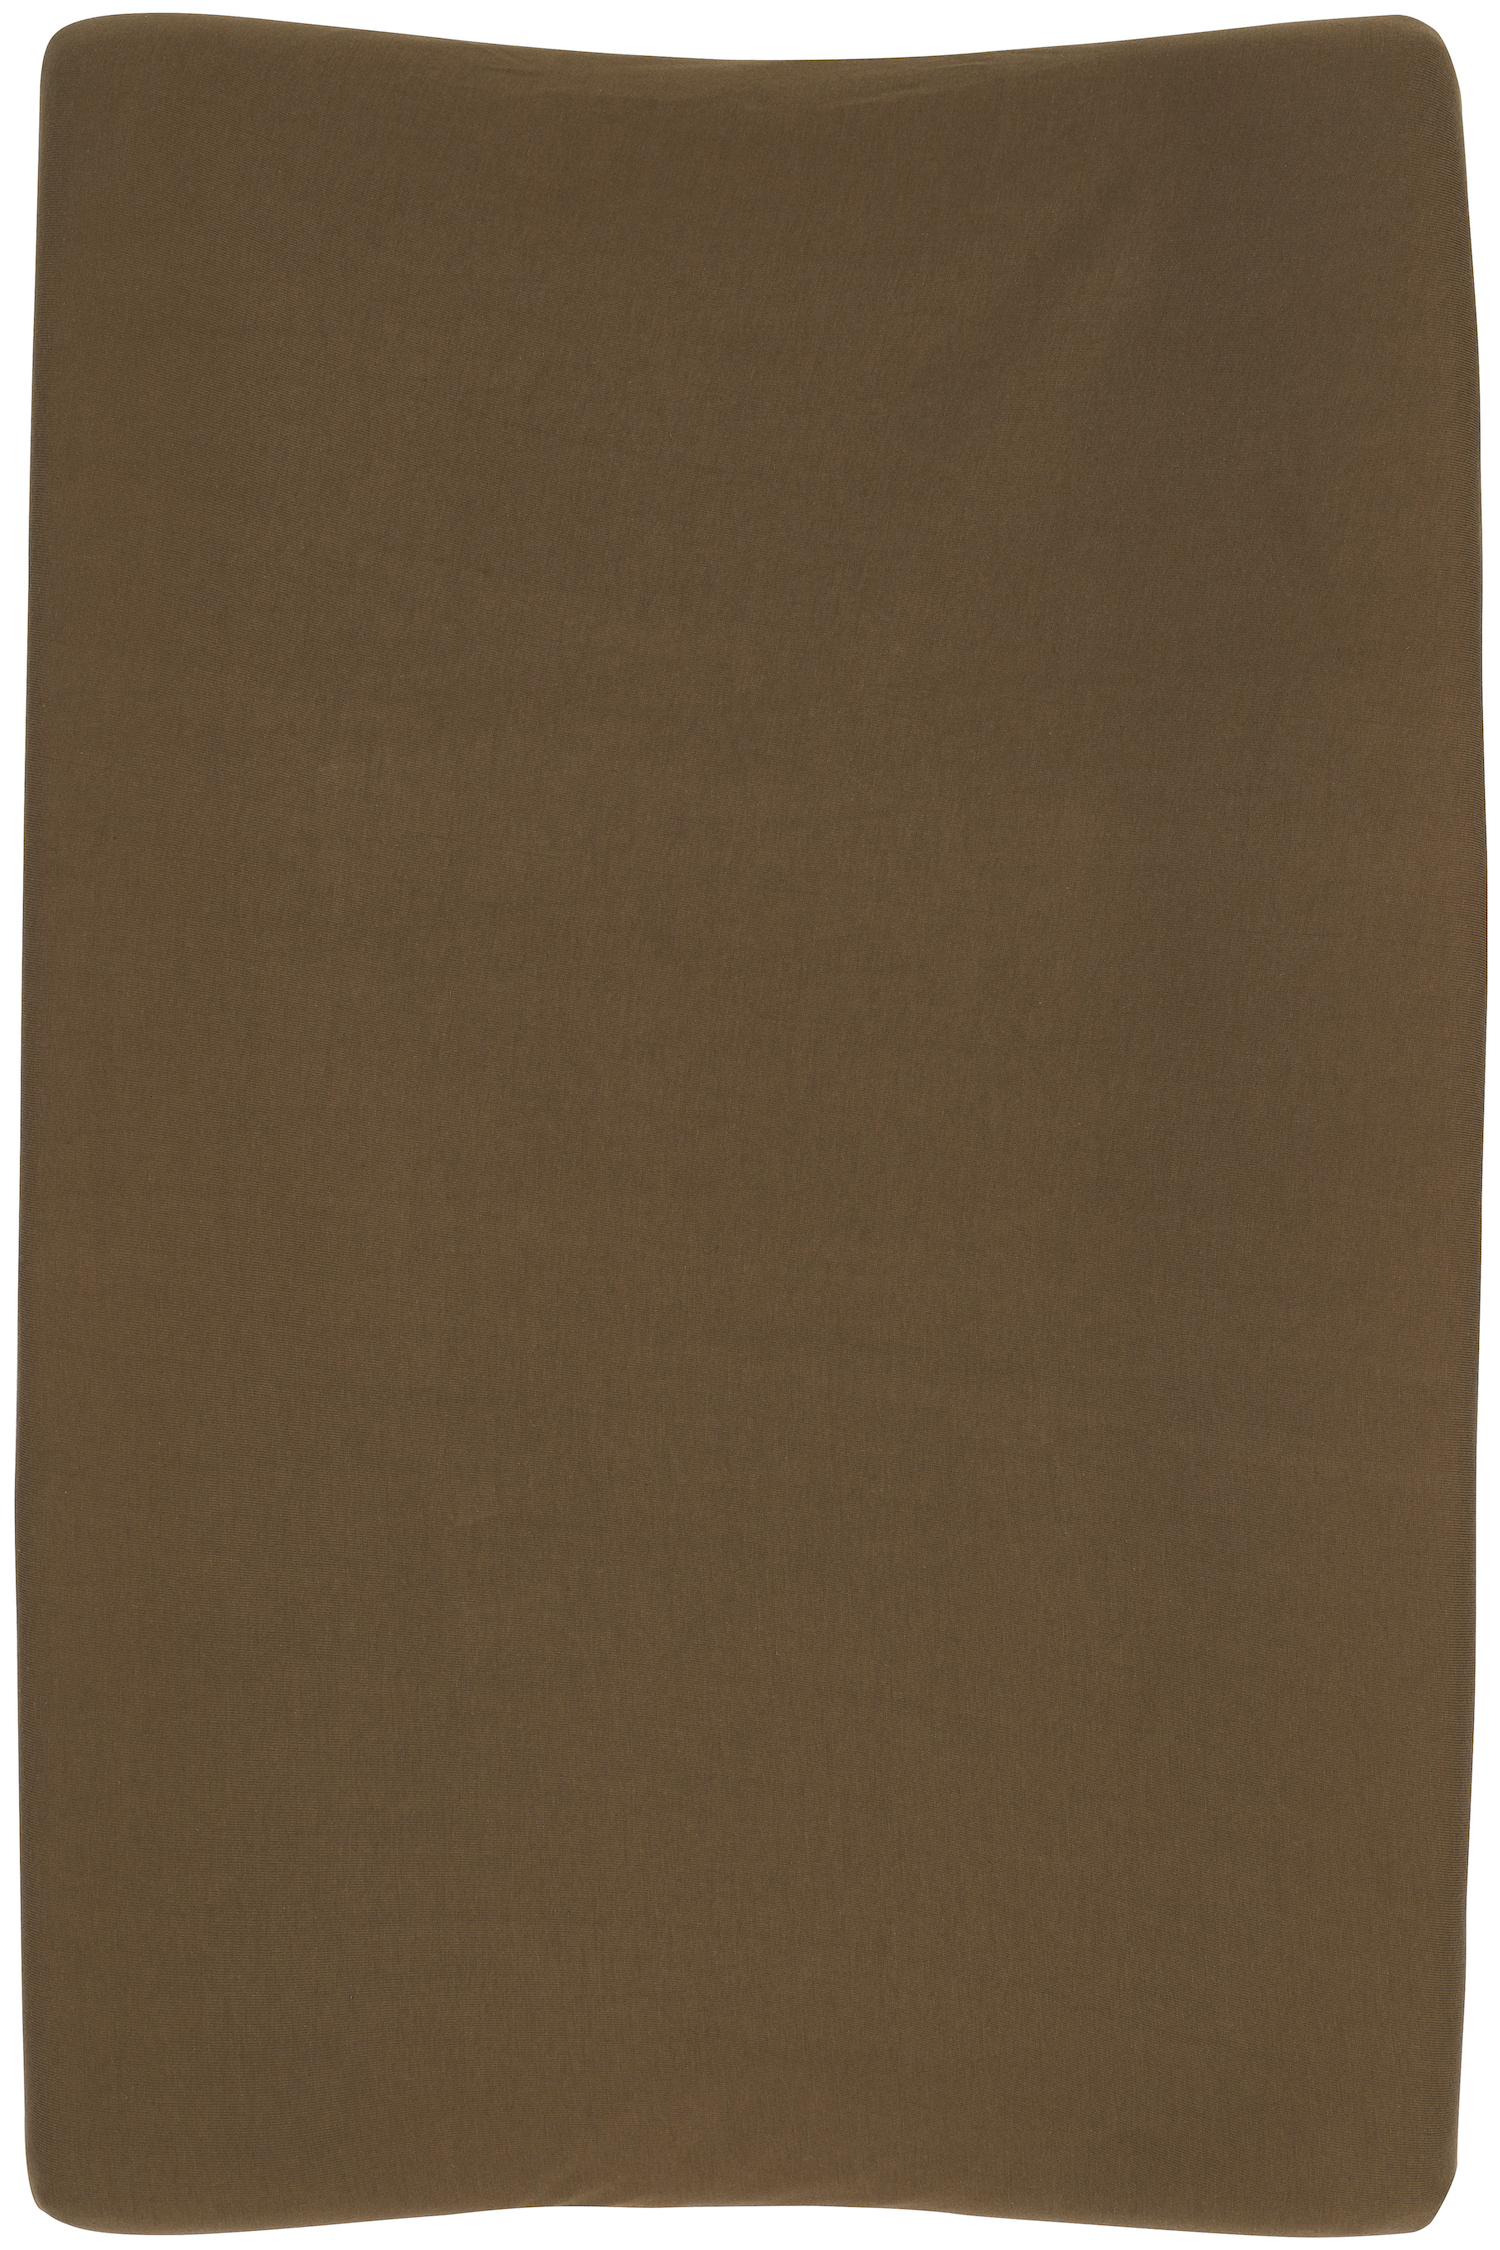 Aankleedkussenhoes Basic Jersey - Chocolate - 50x70cm